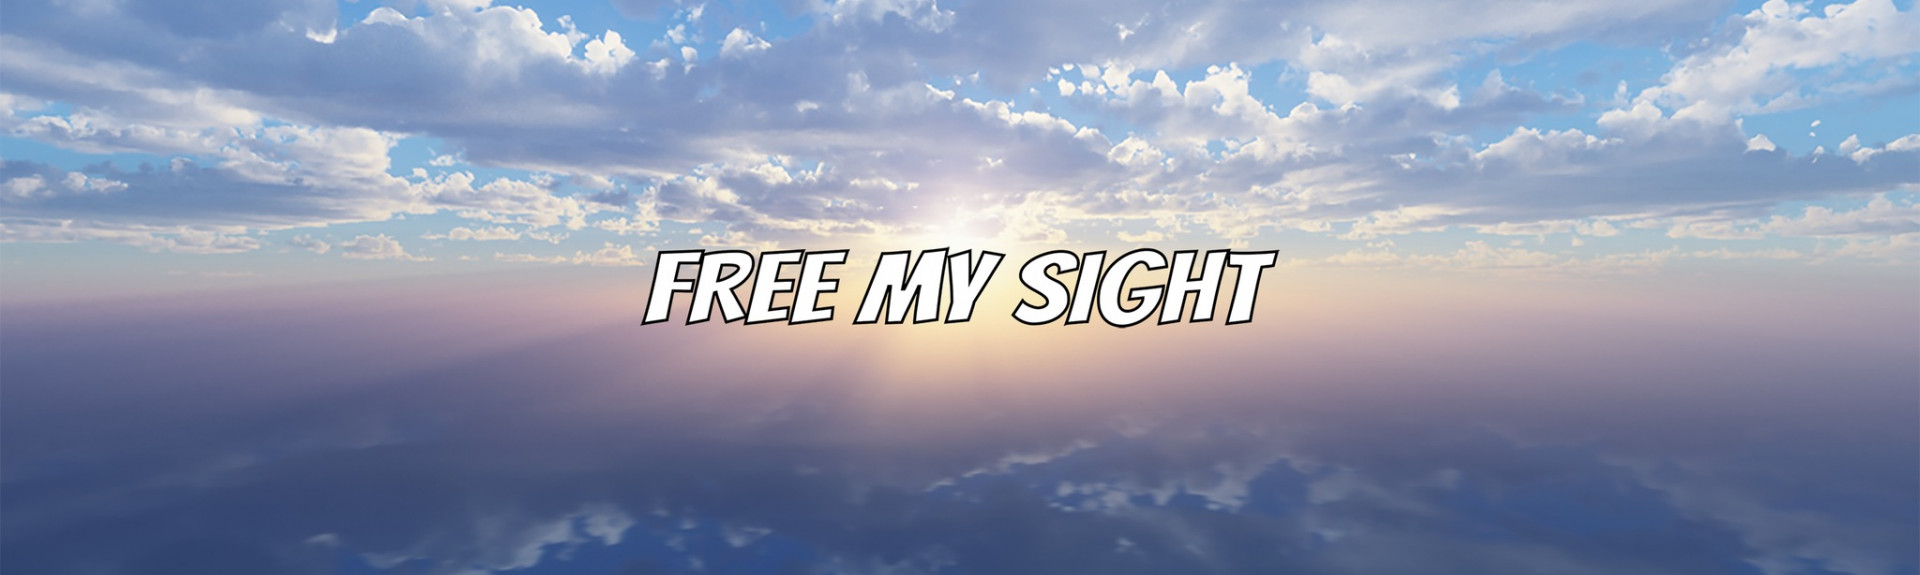 FREE MY SIGHT